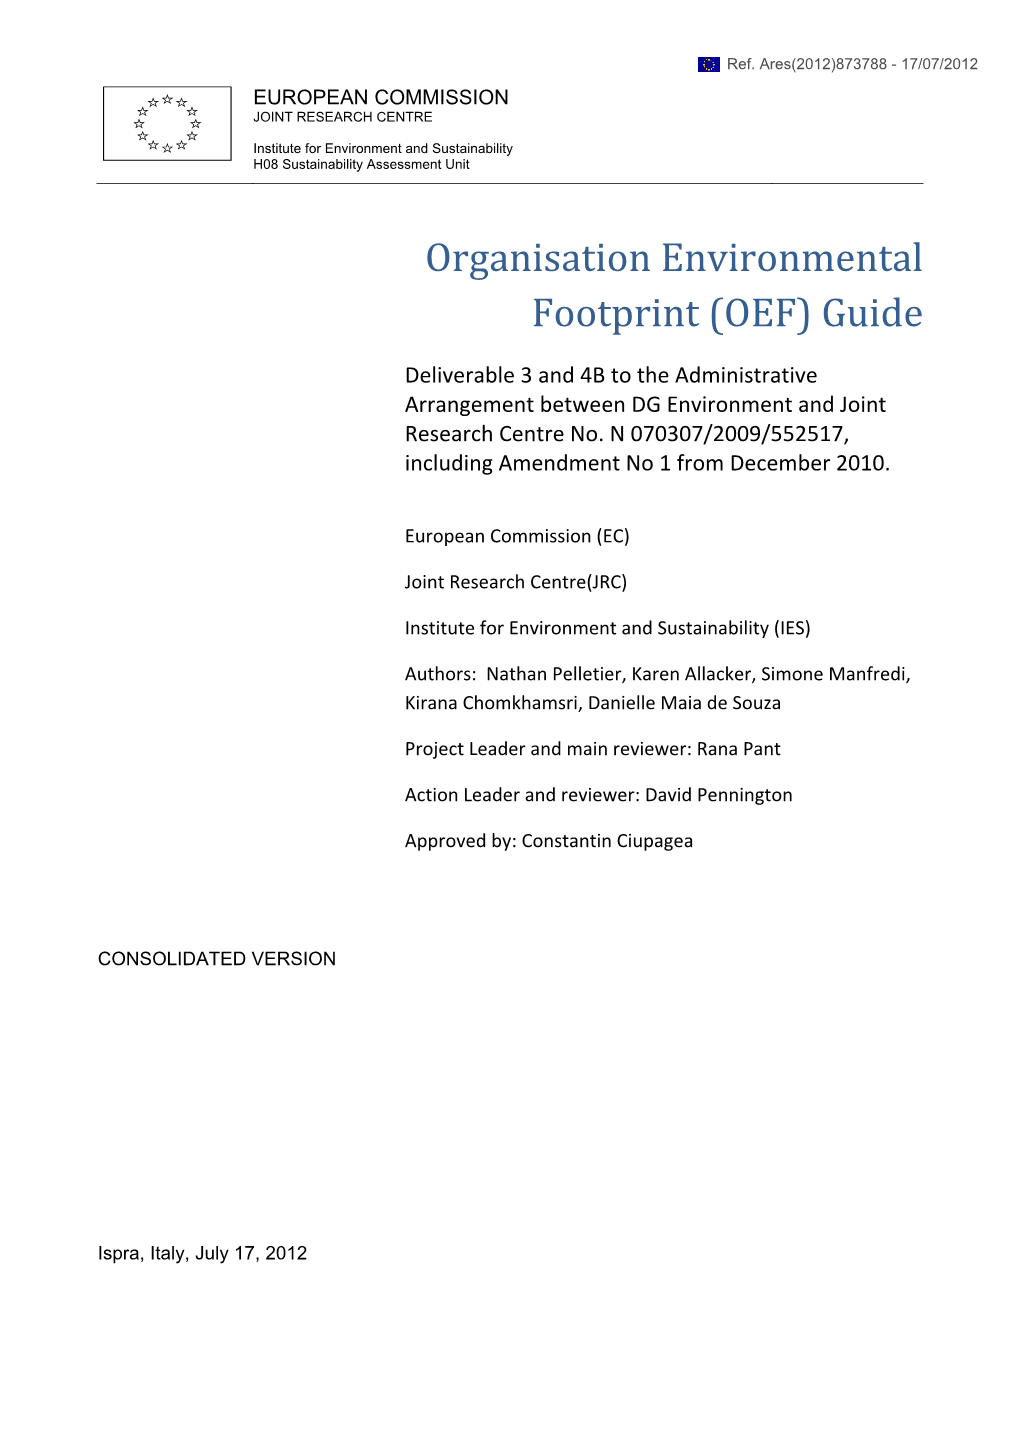 Organisation Environmental Footprint (OEF)